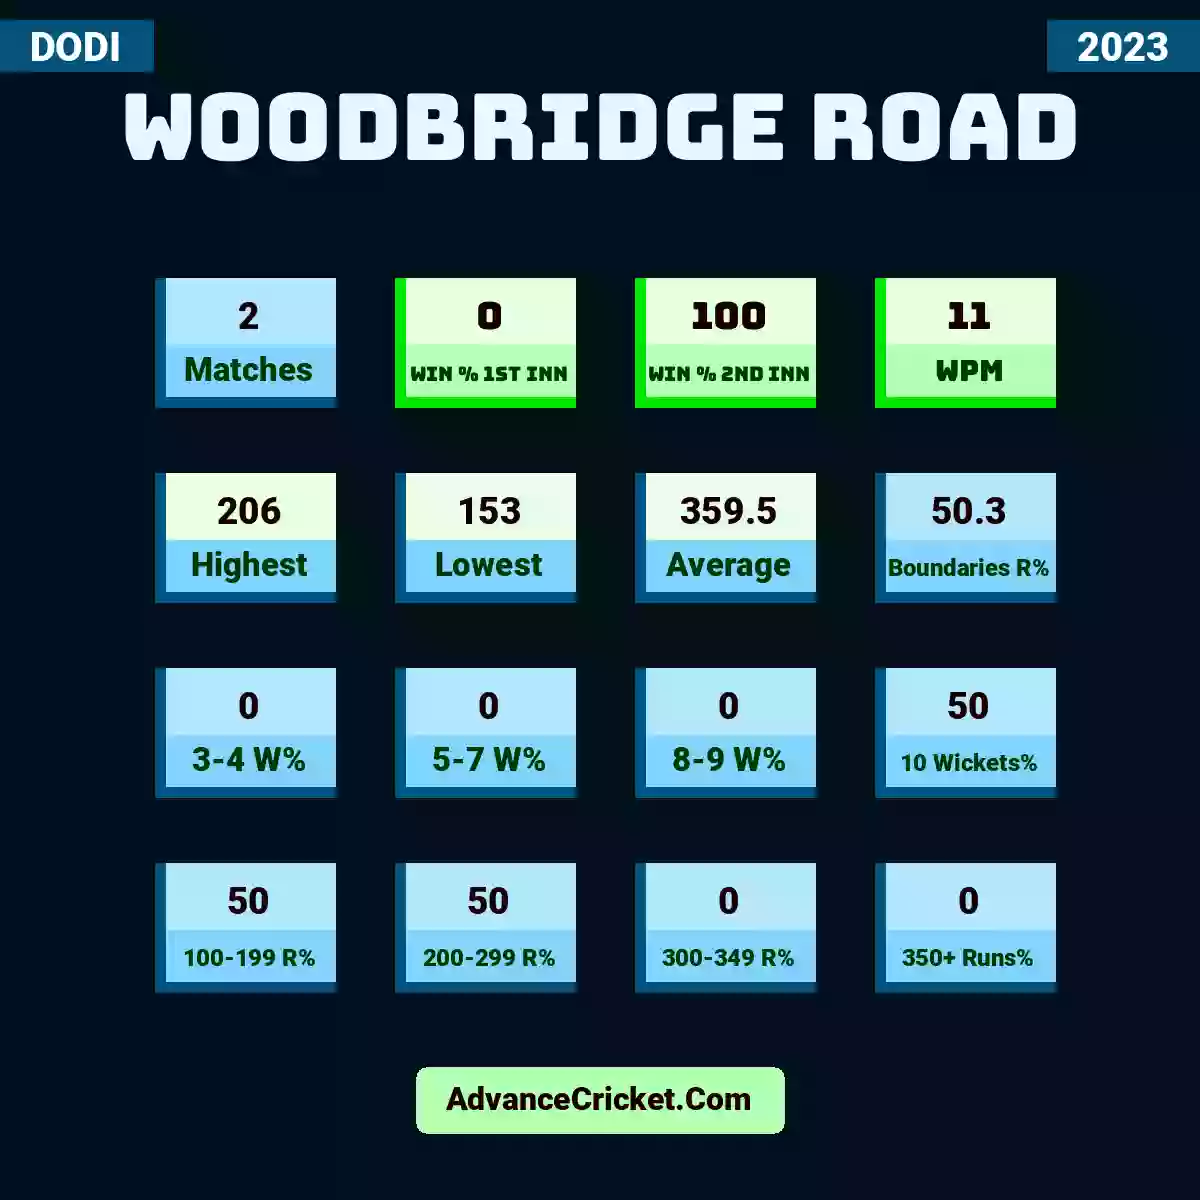 Image showing Woodbridge Road with Matches: 2, Win % 1st Inn: 0, Win % 2nd Inn: 100, WPM: 11, Highest: 206, Lowest: 153, Average: 359.5, Boundaries R%: 50.3, 3-4 W%: 0, 5-7 W%: 0, 8-9 W%: 0, 10 Wickets%: 50, 100-199 R%: 50, 200-299 R%: 50, 300-349 R%: 0, 350+ Runs%: 0.